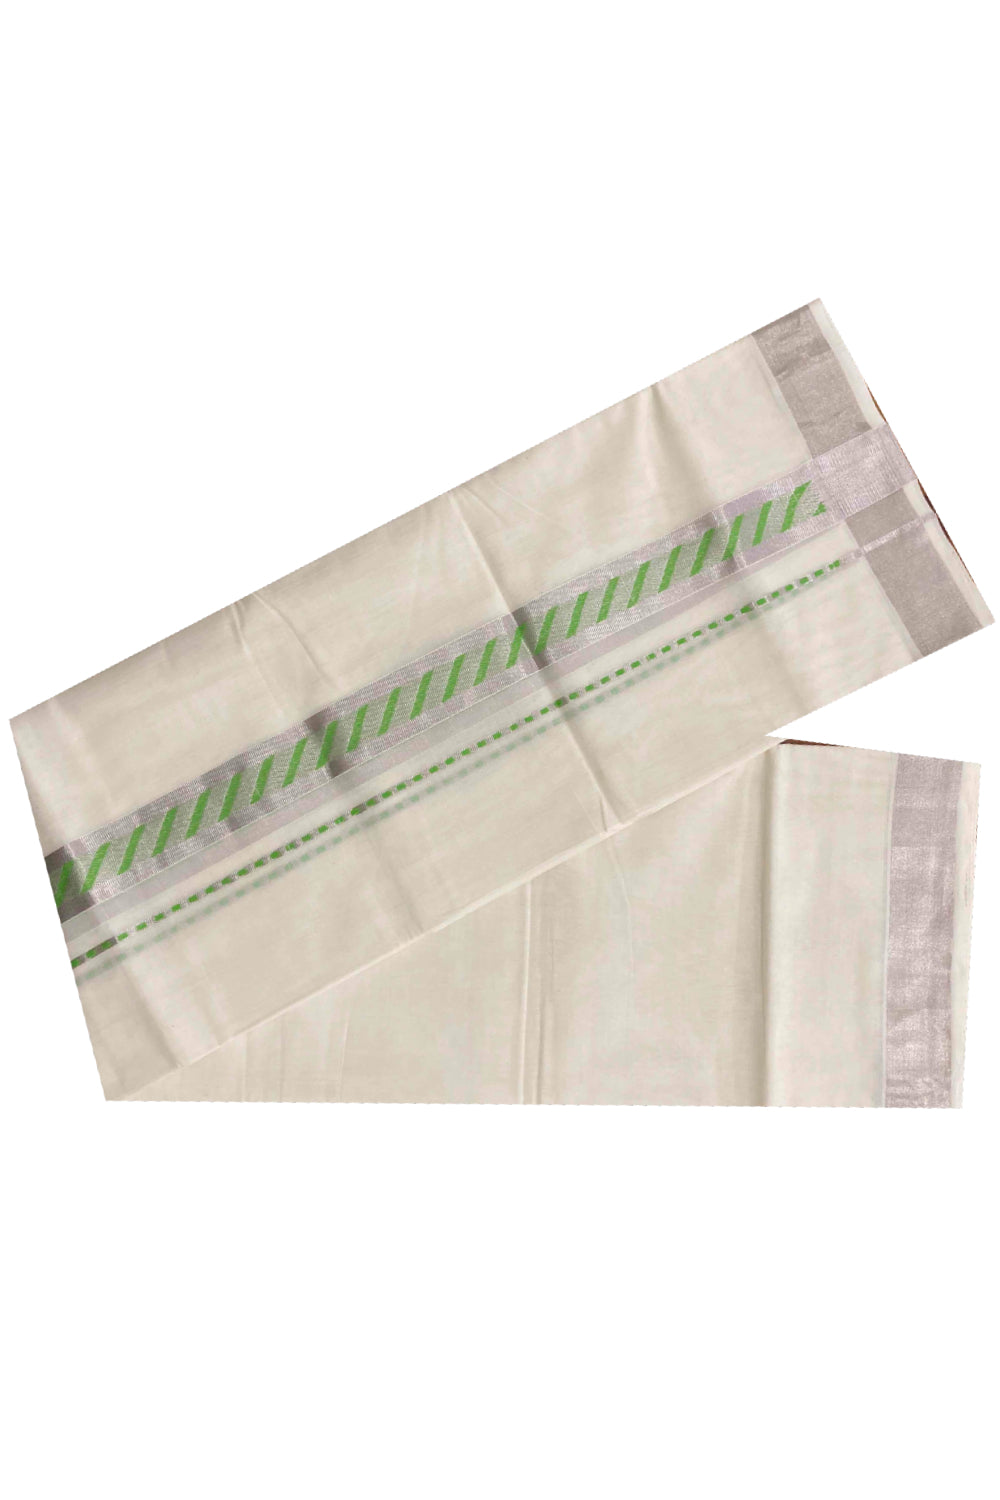 Southloom Handloom Premium Silver Kasavu Dhoti with Light Green Woven Design Border